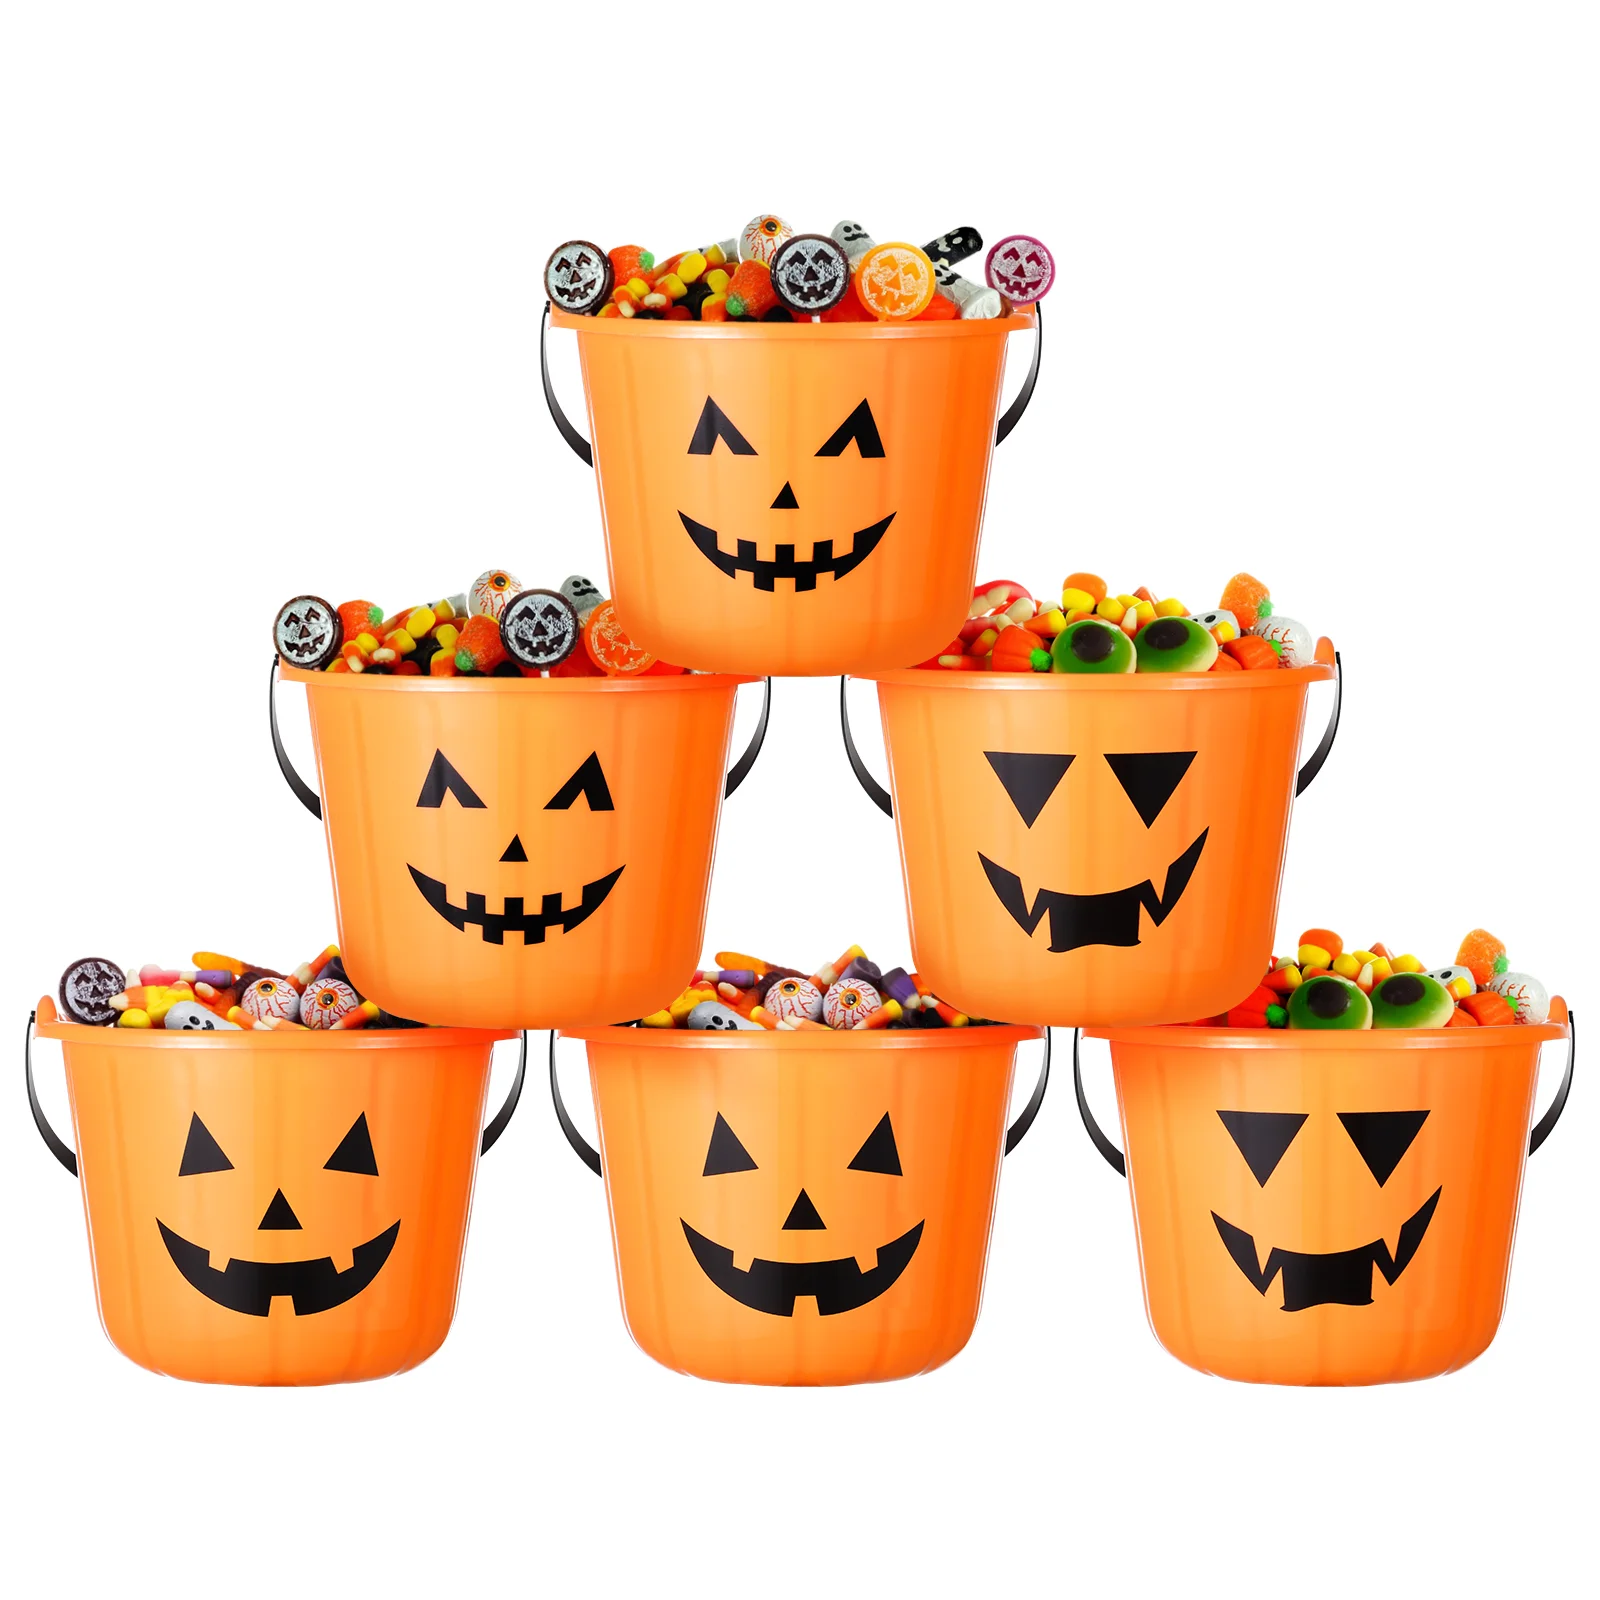 

Cabilock 6Pcs Pumpkin Trick or Treat Bucket Halloween Candy Pail Basket with Handle Party Favor Holder Party Supplies (Orange)